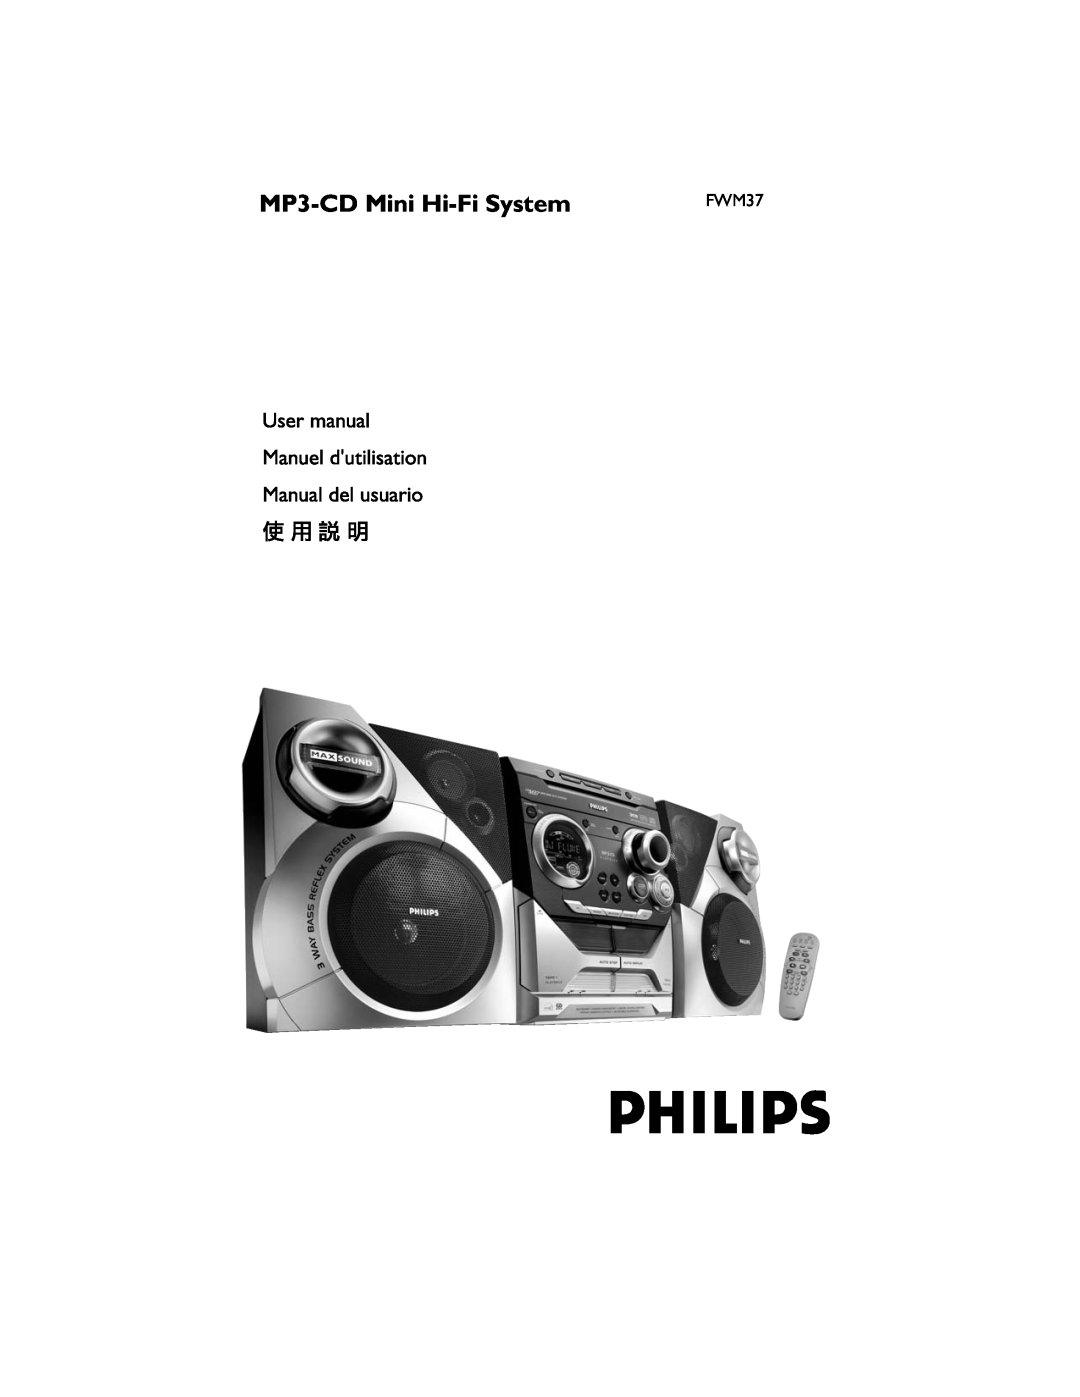 Philips FWM37 manual MP3-CDMini Hi-FiSystem 